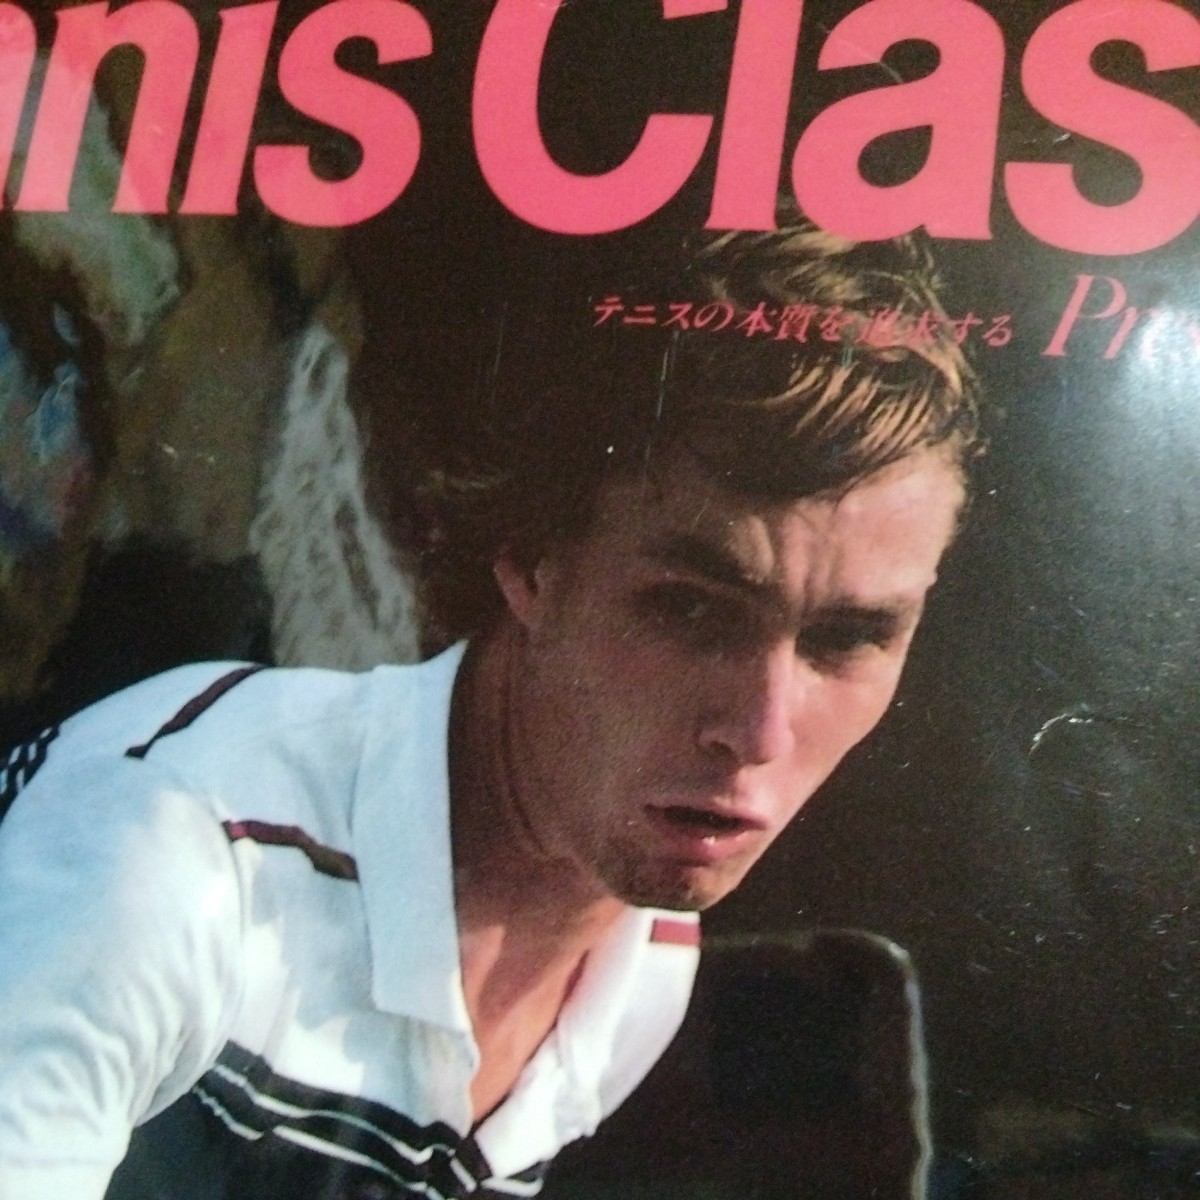  cover i one Len dollar A4 laminate magazine scraps poster interior advertisement tennis Classic 